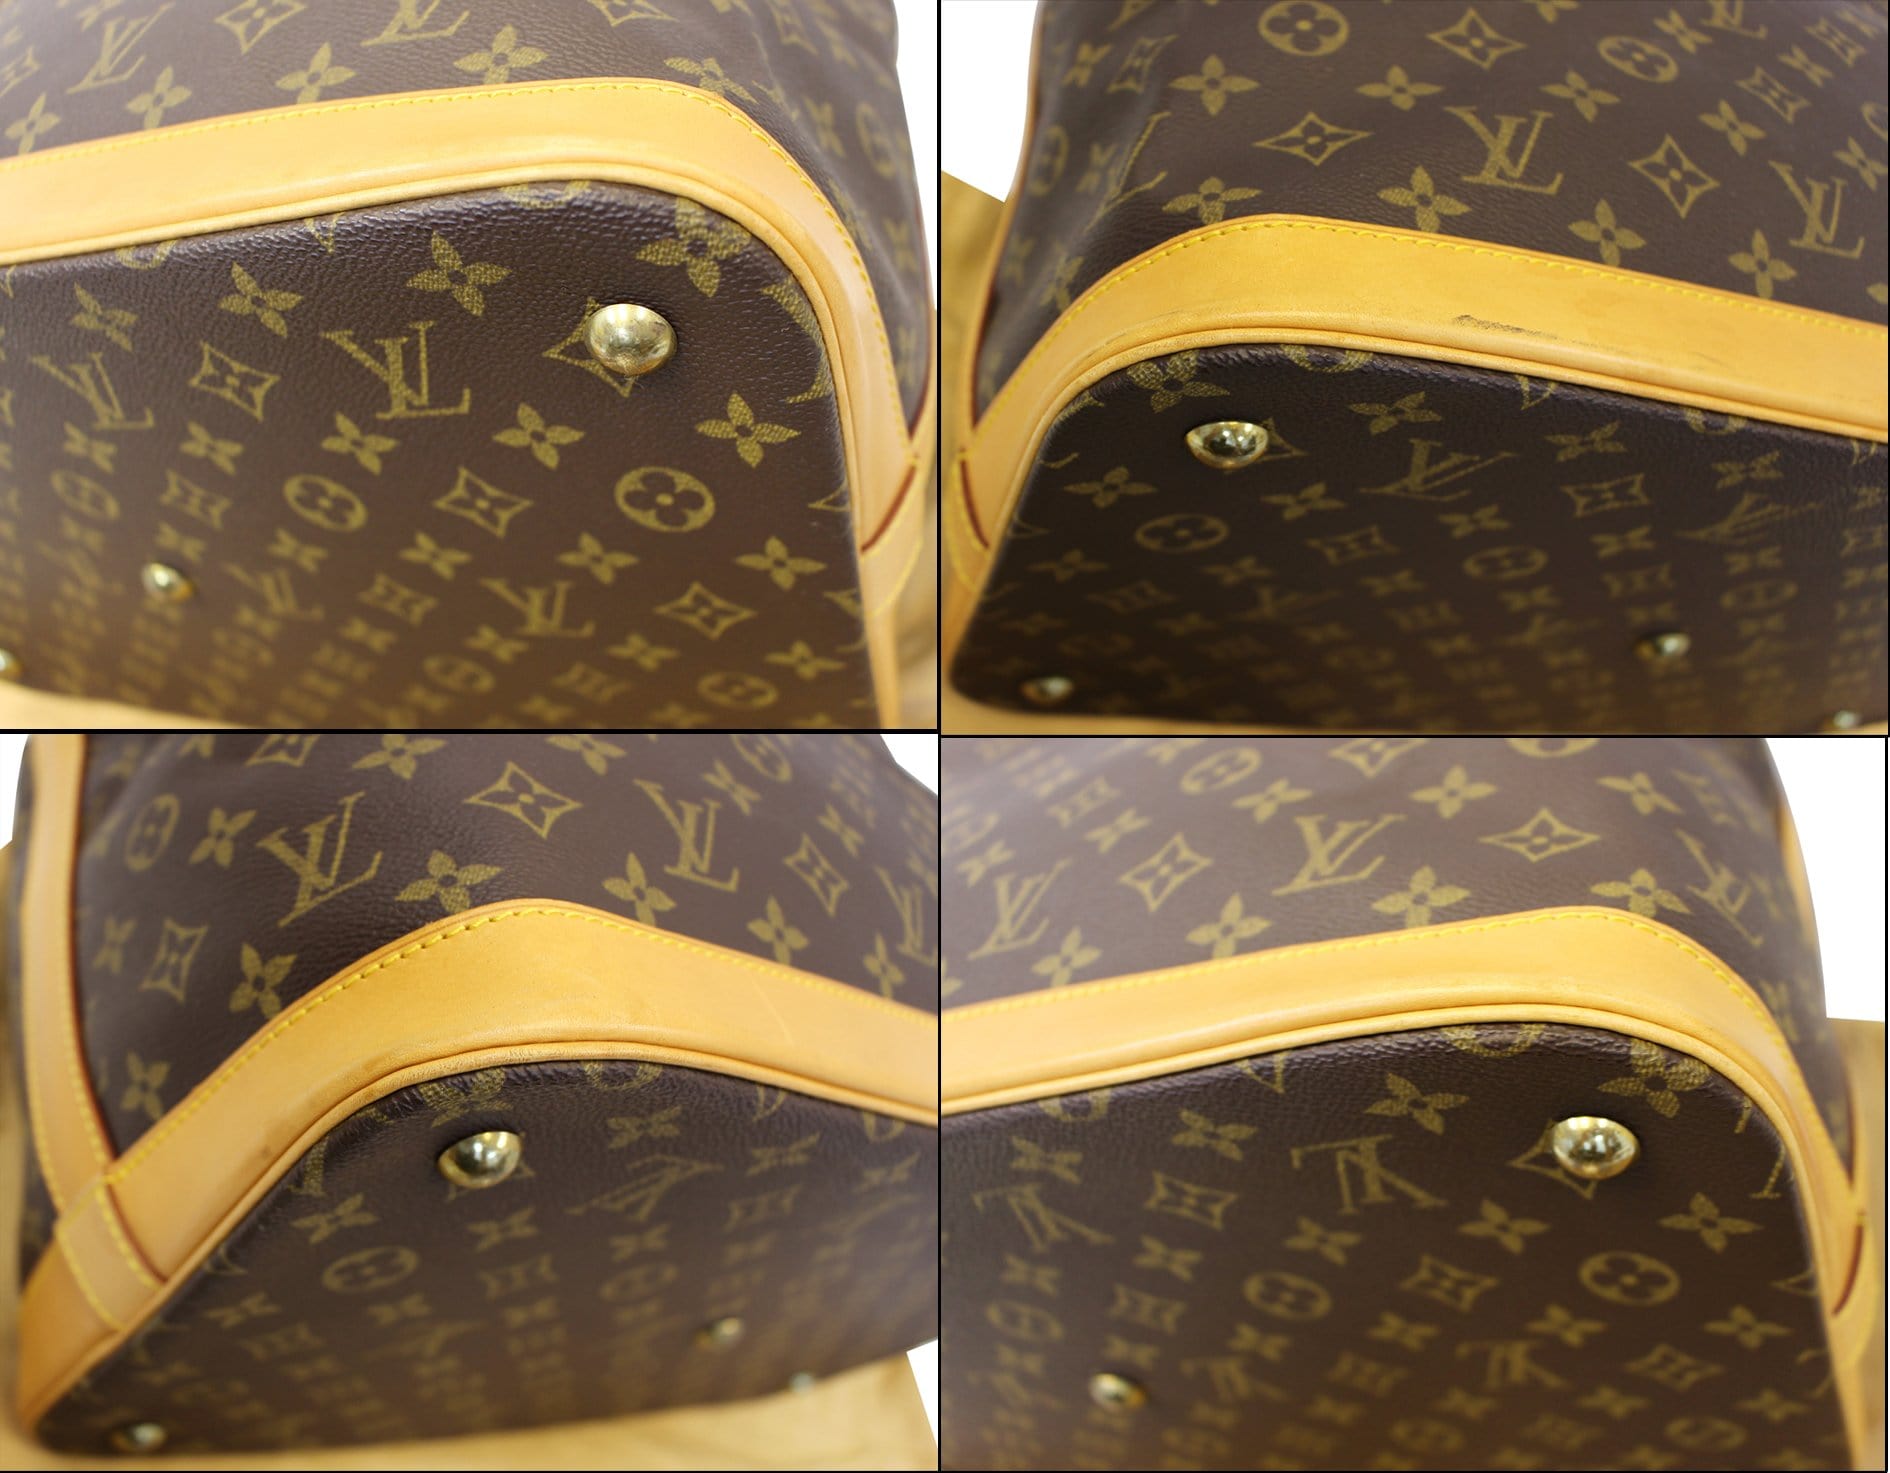 Louis Vuitton Cruiser 40 Travel Bag